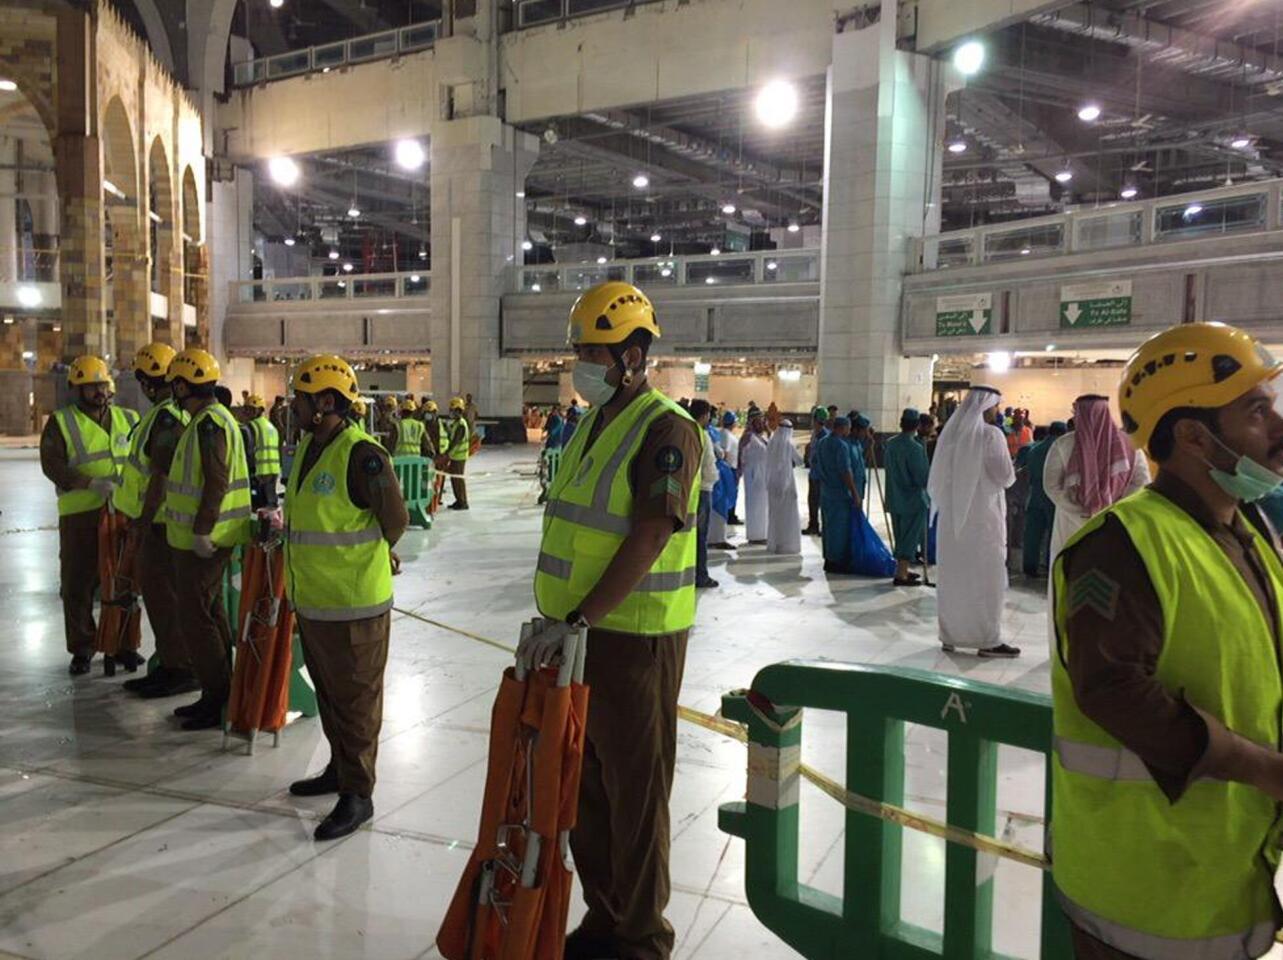 Crane collapse at Mecca mosque